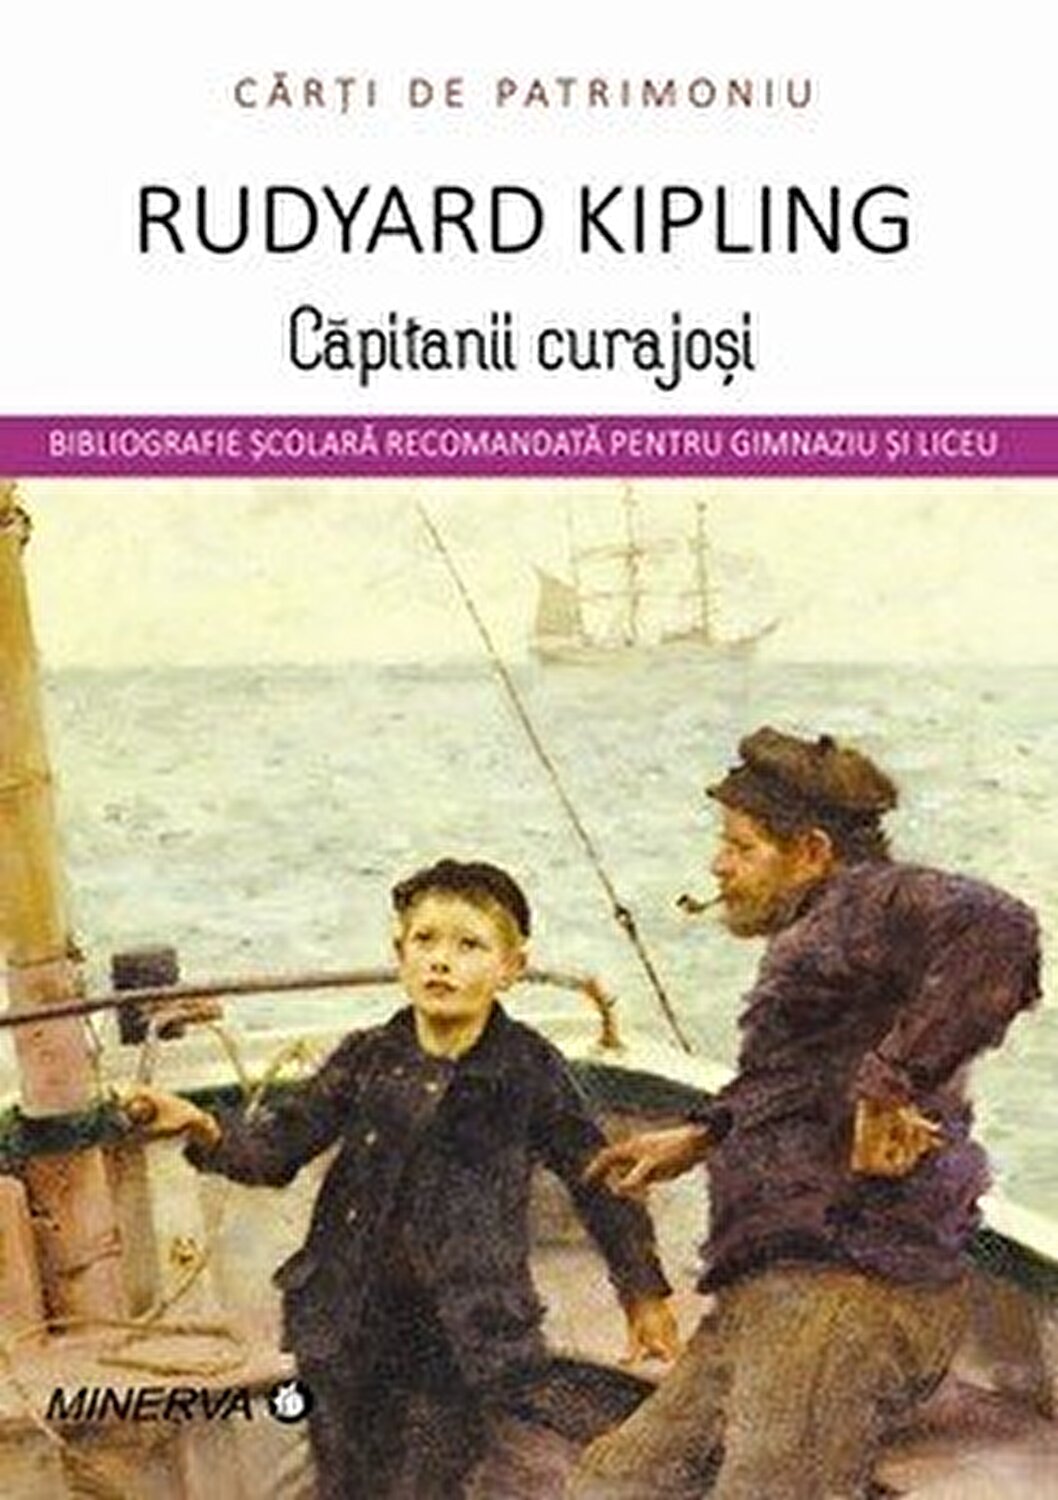 Capitanii curajosi | Rudyard Kipling Bibliografie